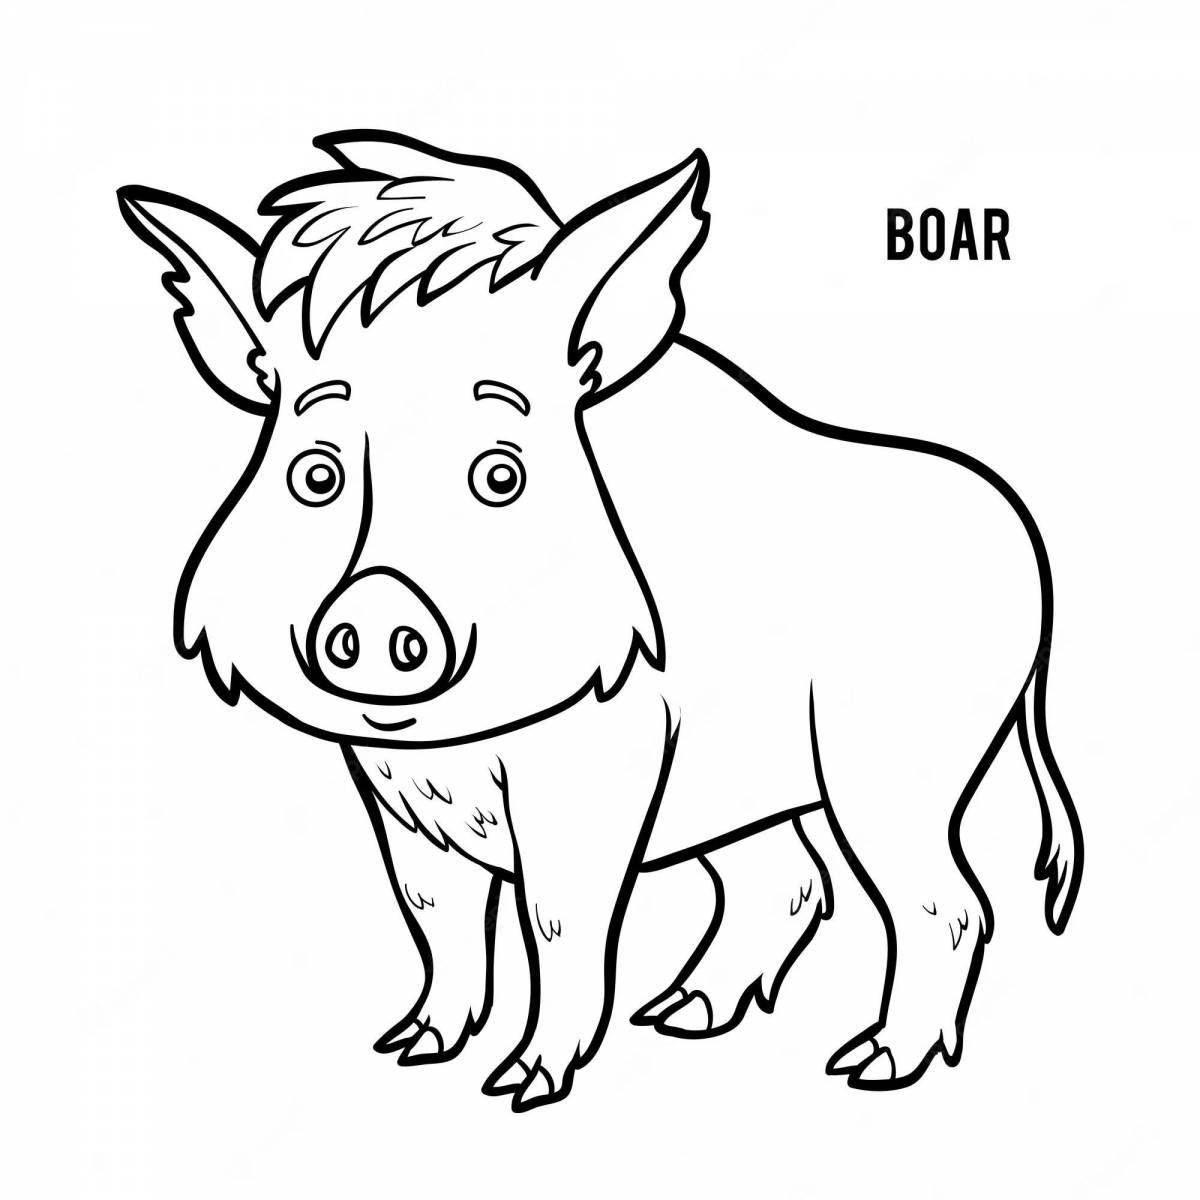 Coloring bright boar for children